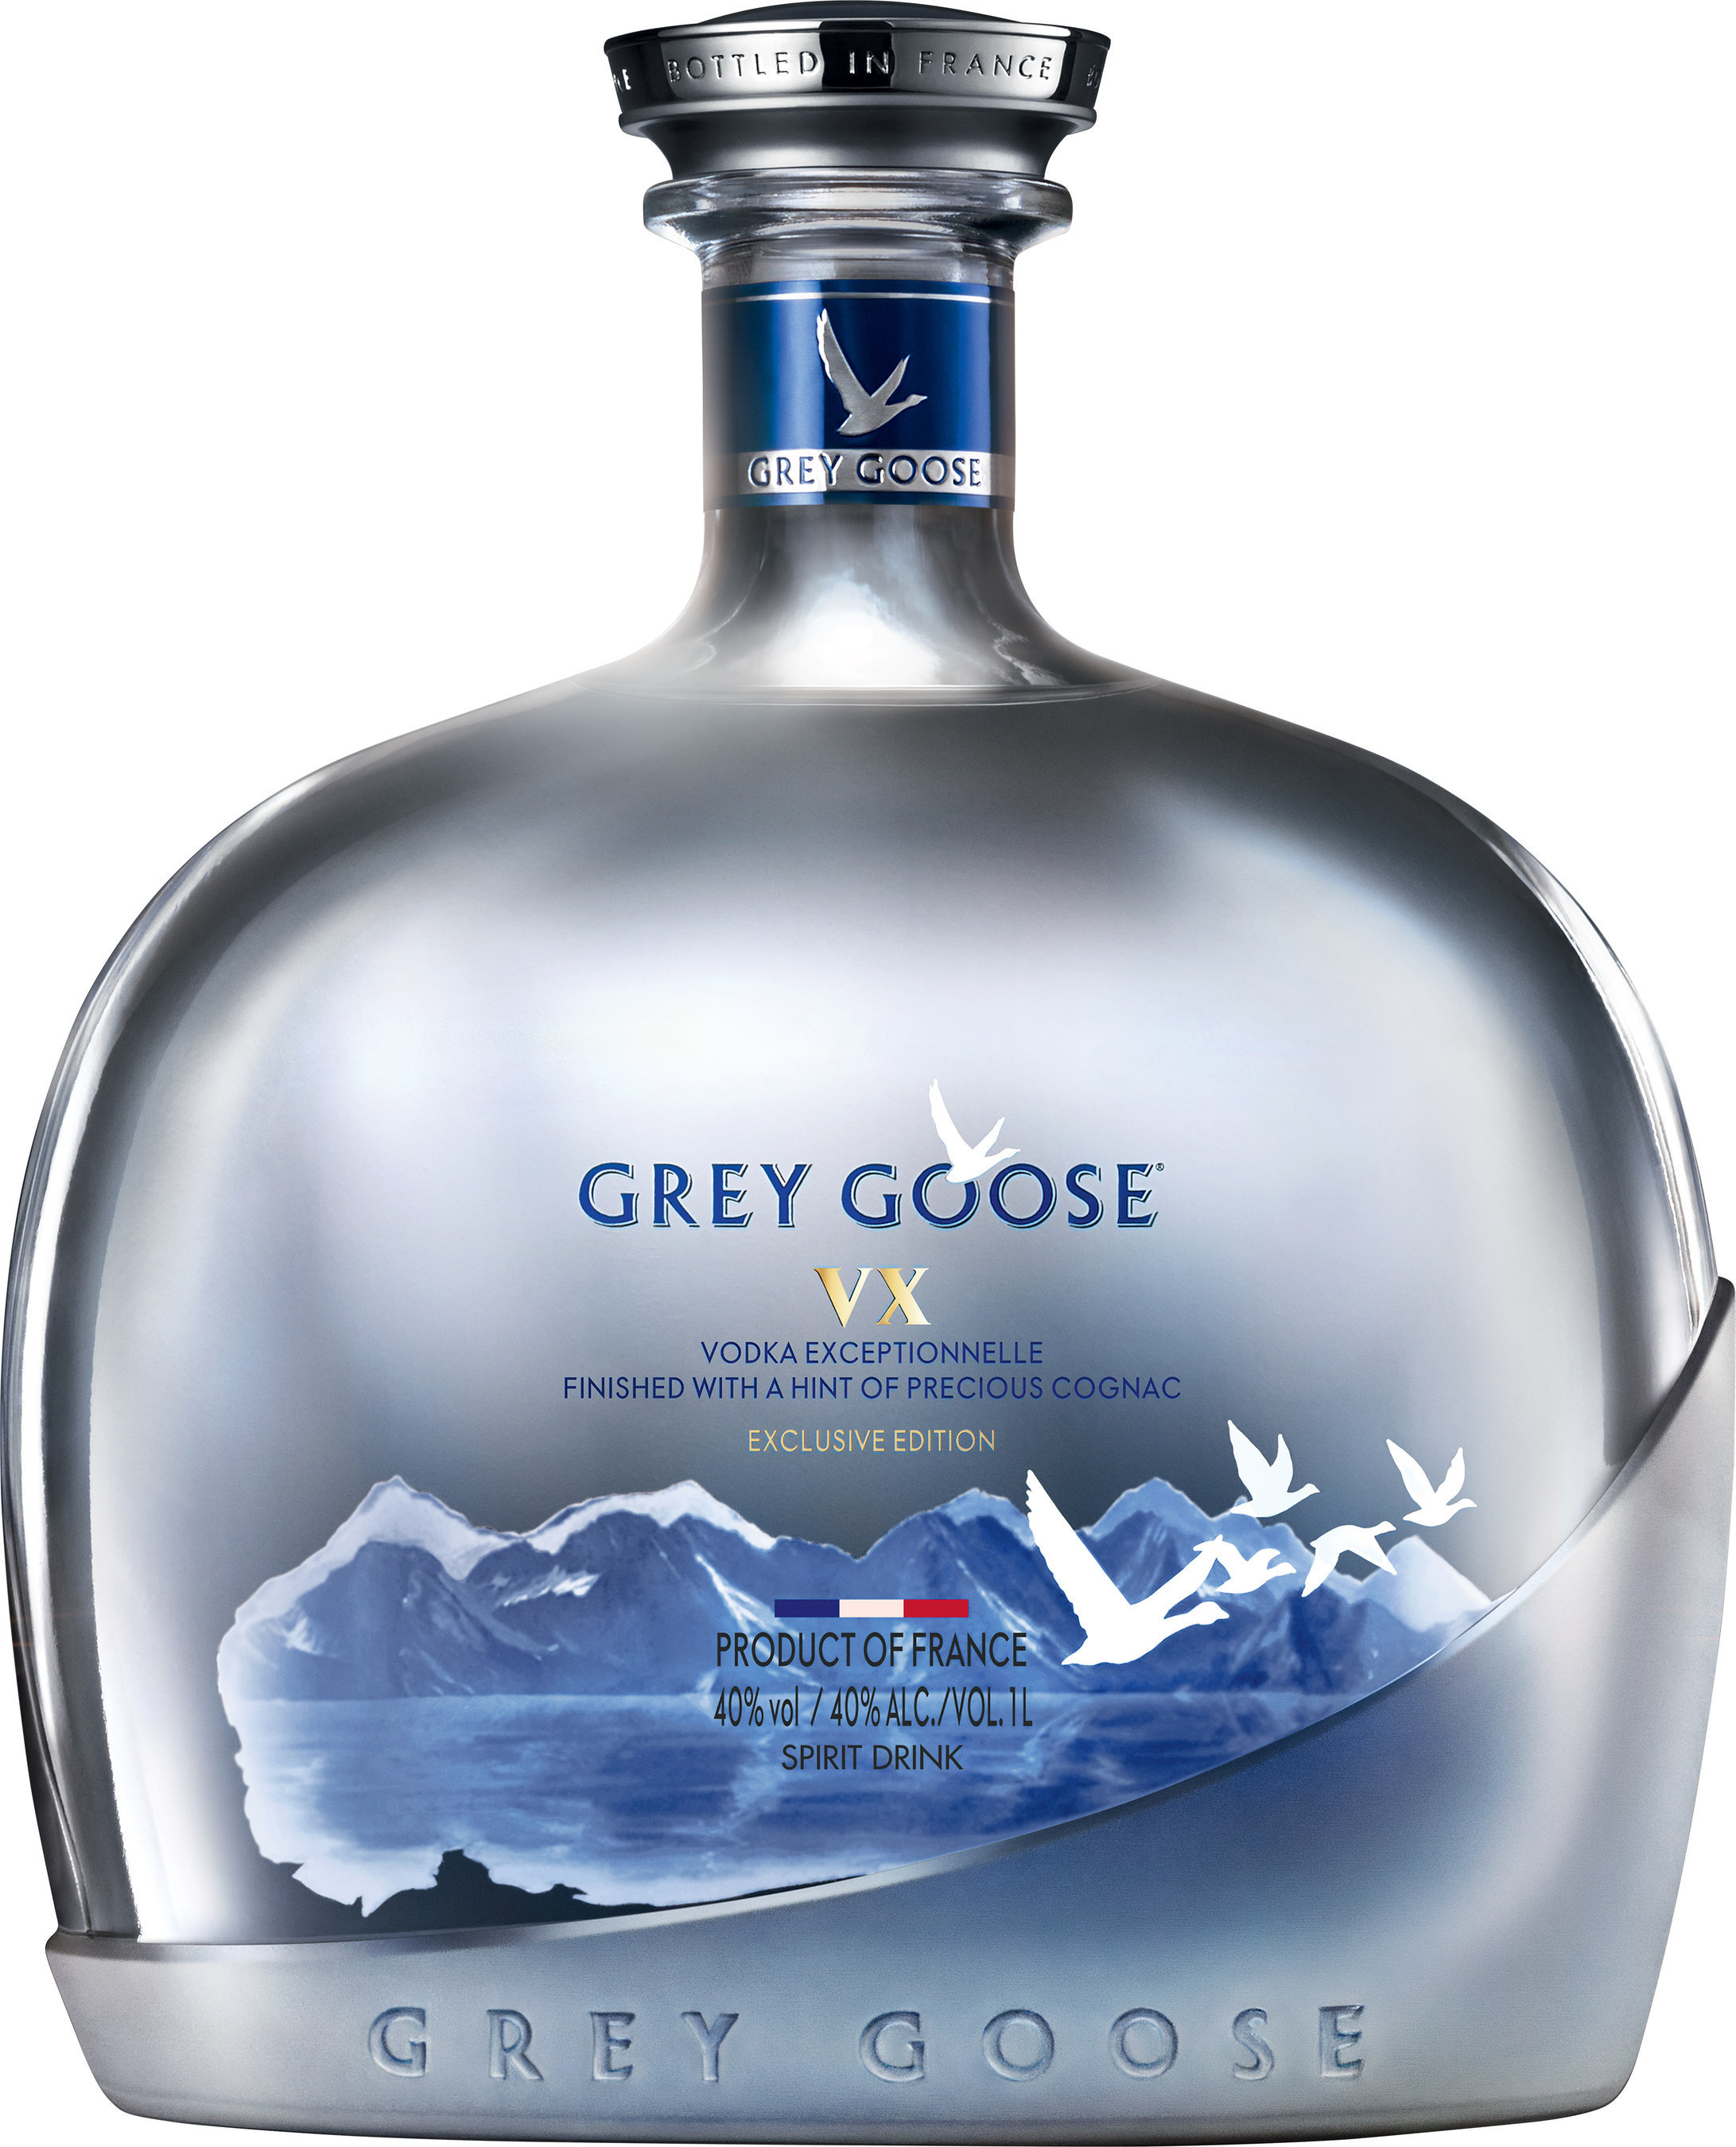 GREY GOOSE® Vodka Presents GREY GOOSE® VX, A Pioneering New Spirit | Vodka